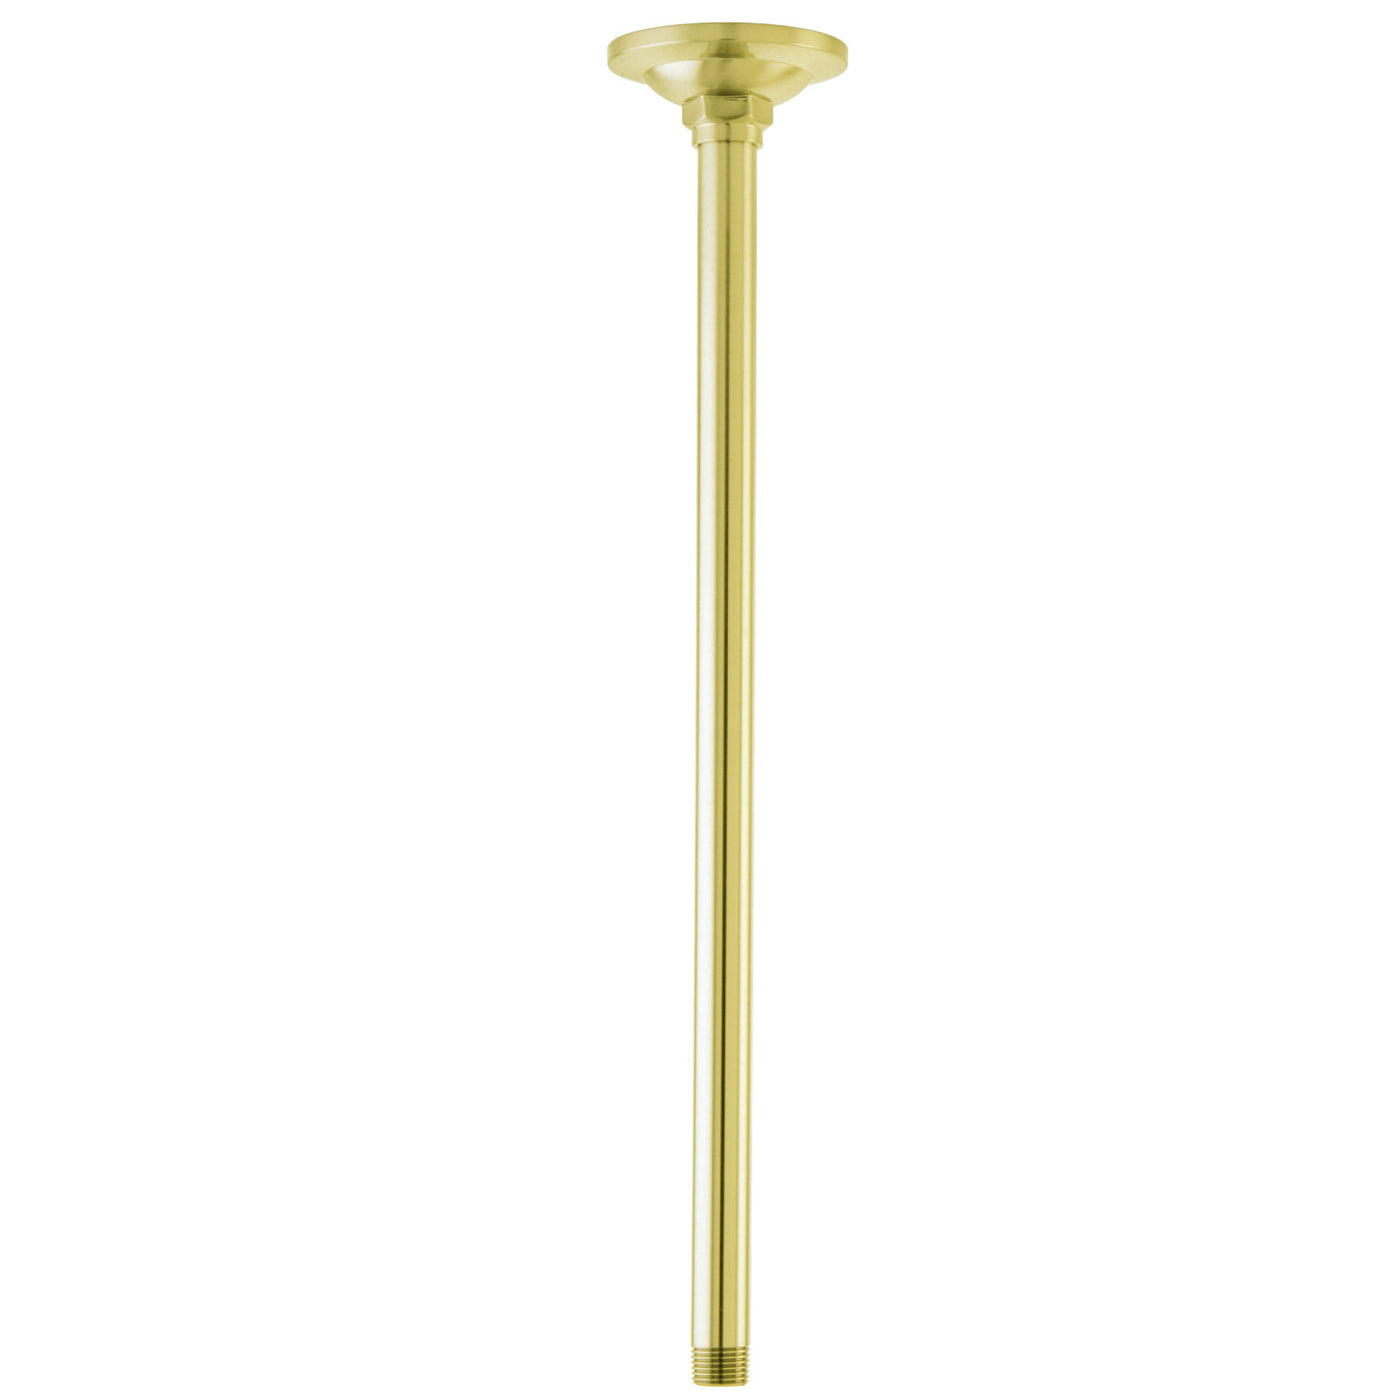 Elements of Design DK2172 17-Inch Rain Drop Shower Arm, Polished Brass